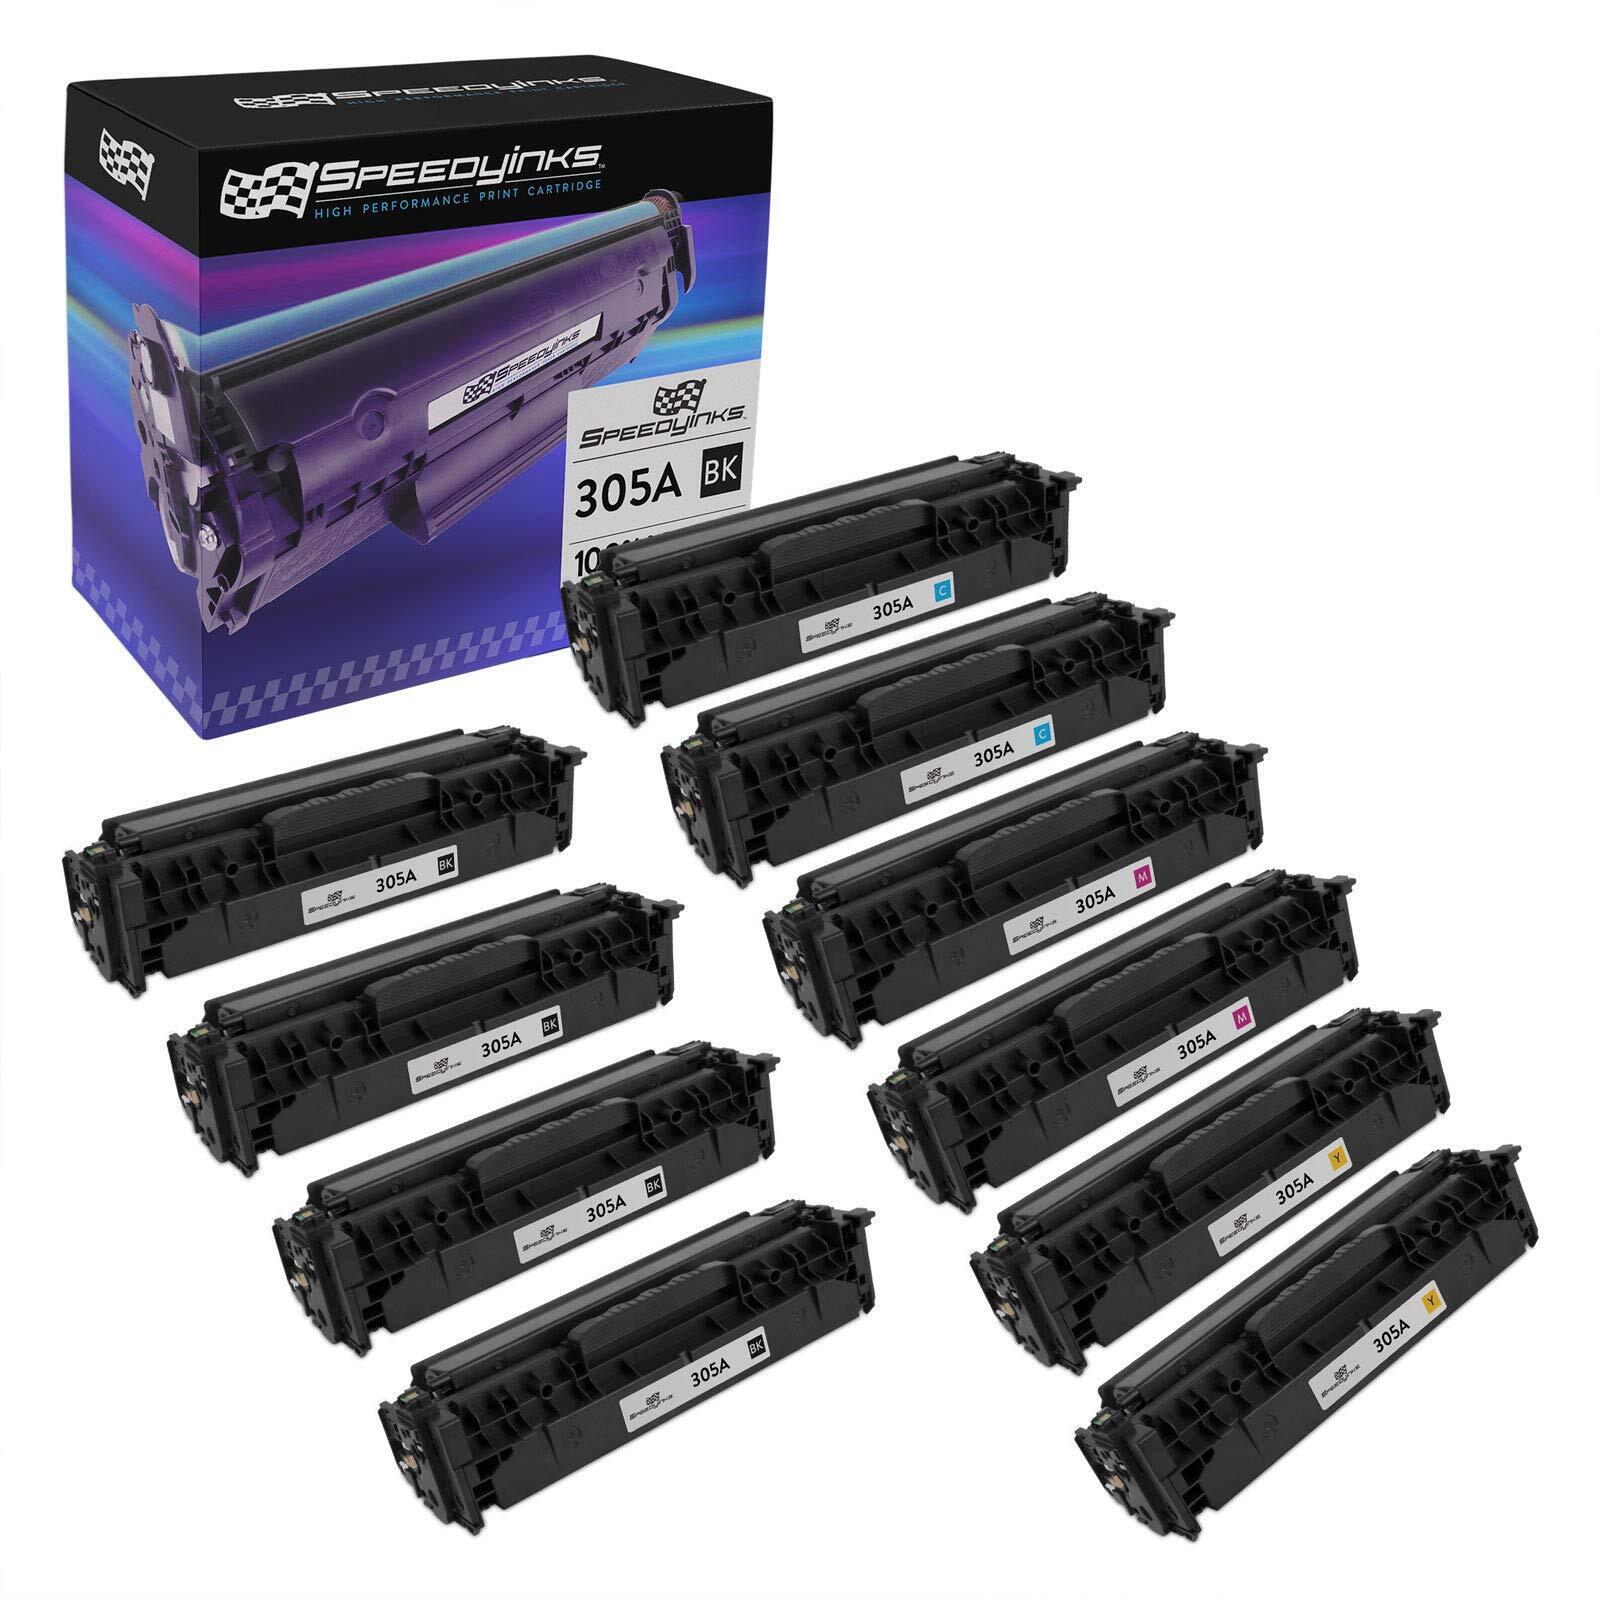 10PK Reman Toner Cartridge for HP305A LaserJet Pro 400 Color M475dn M451nw Black